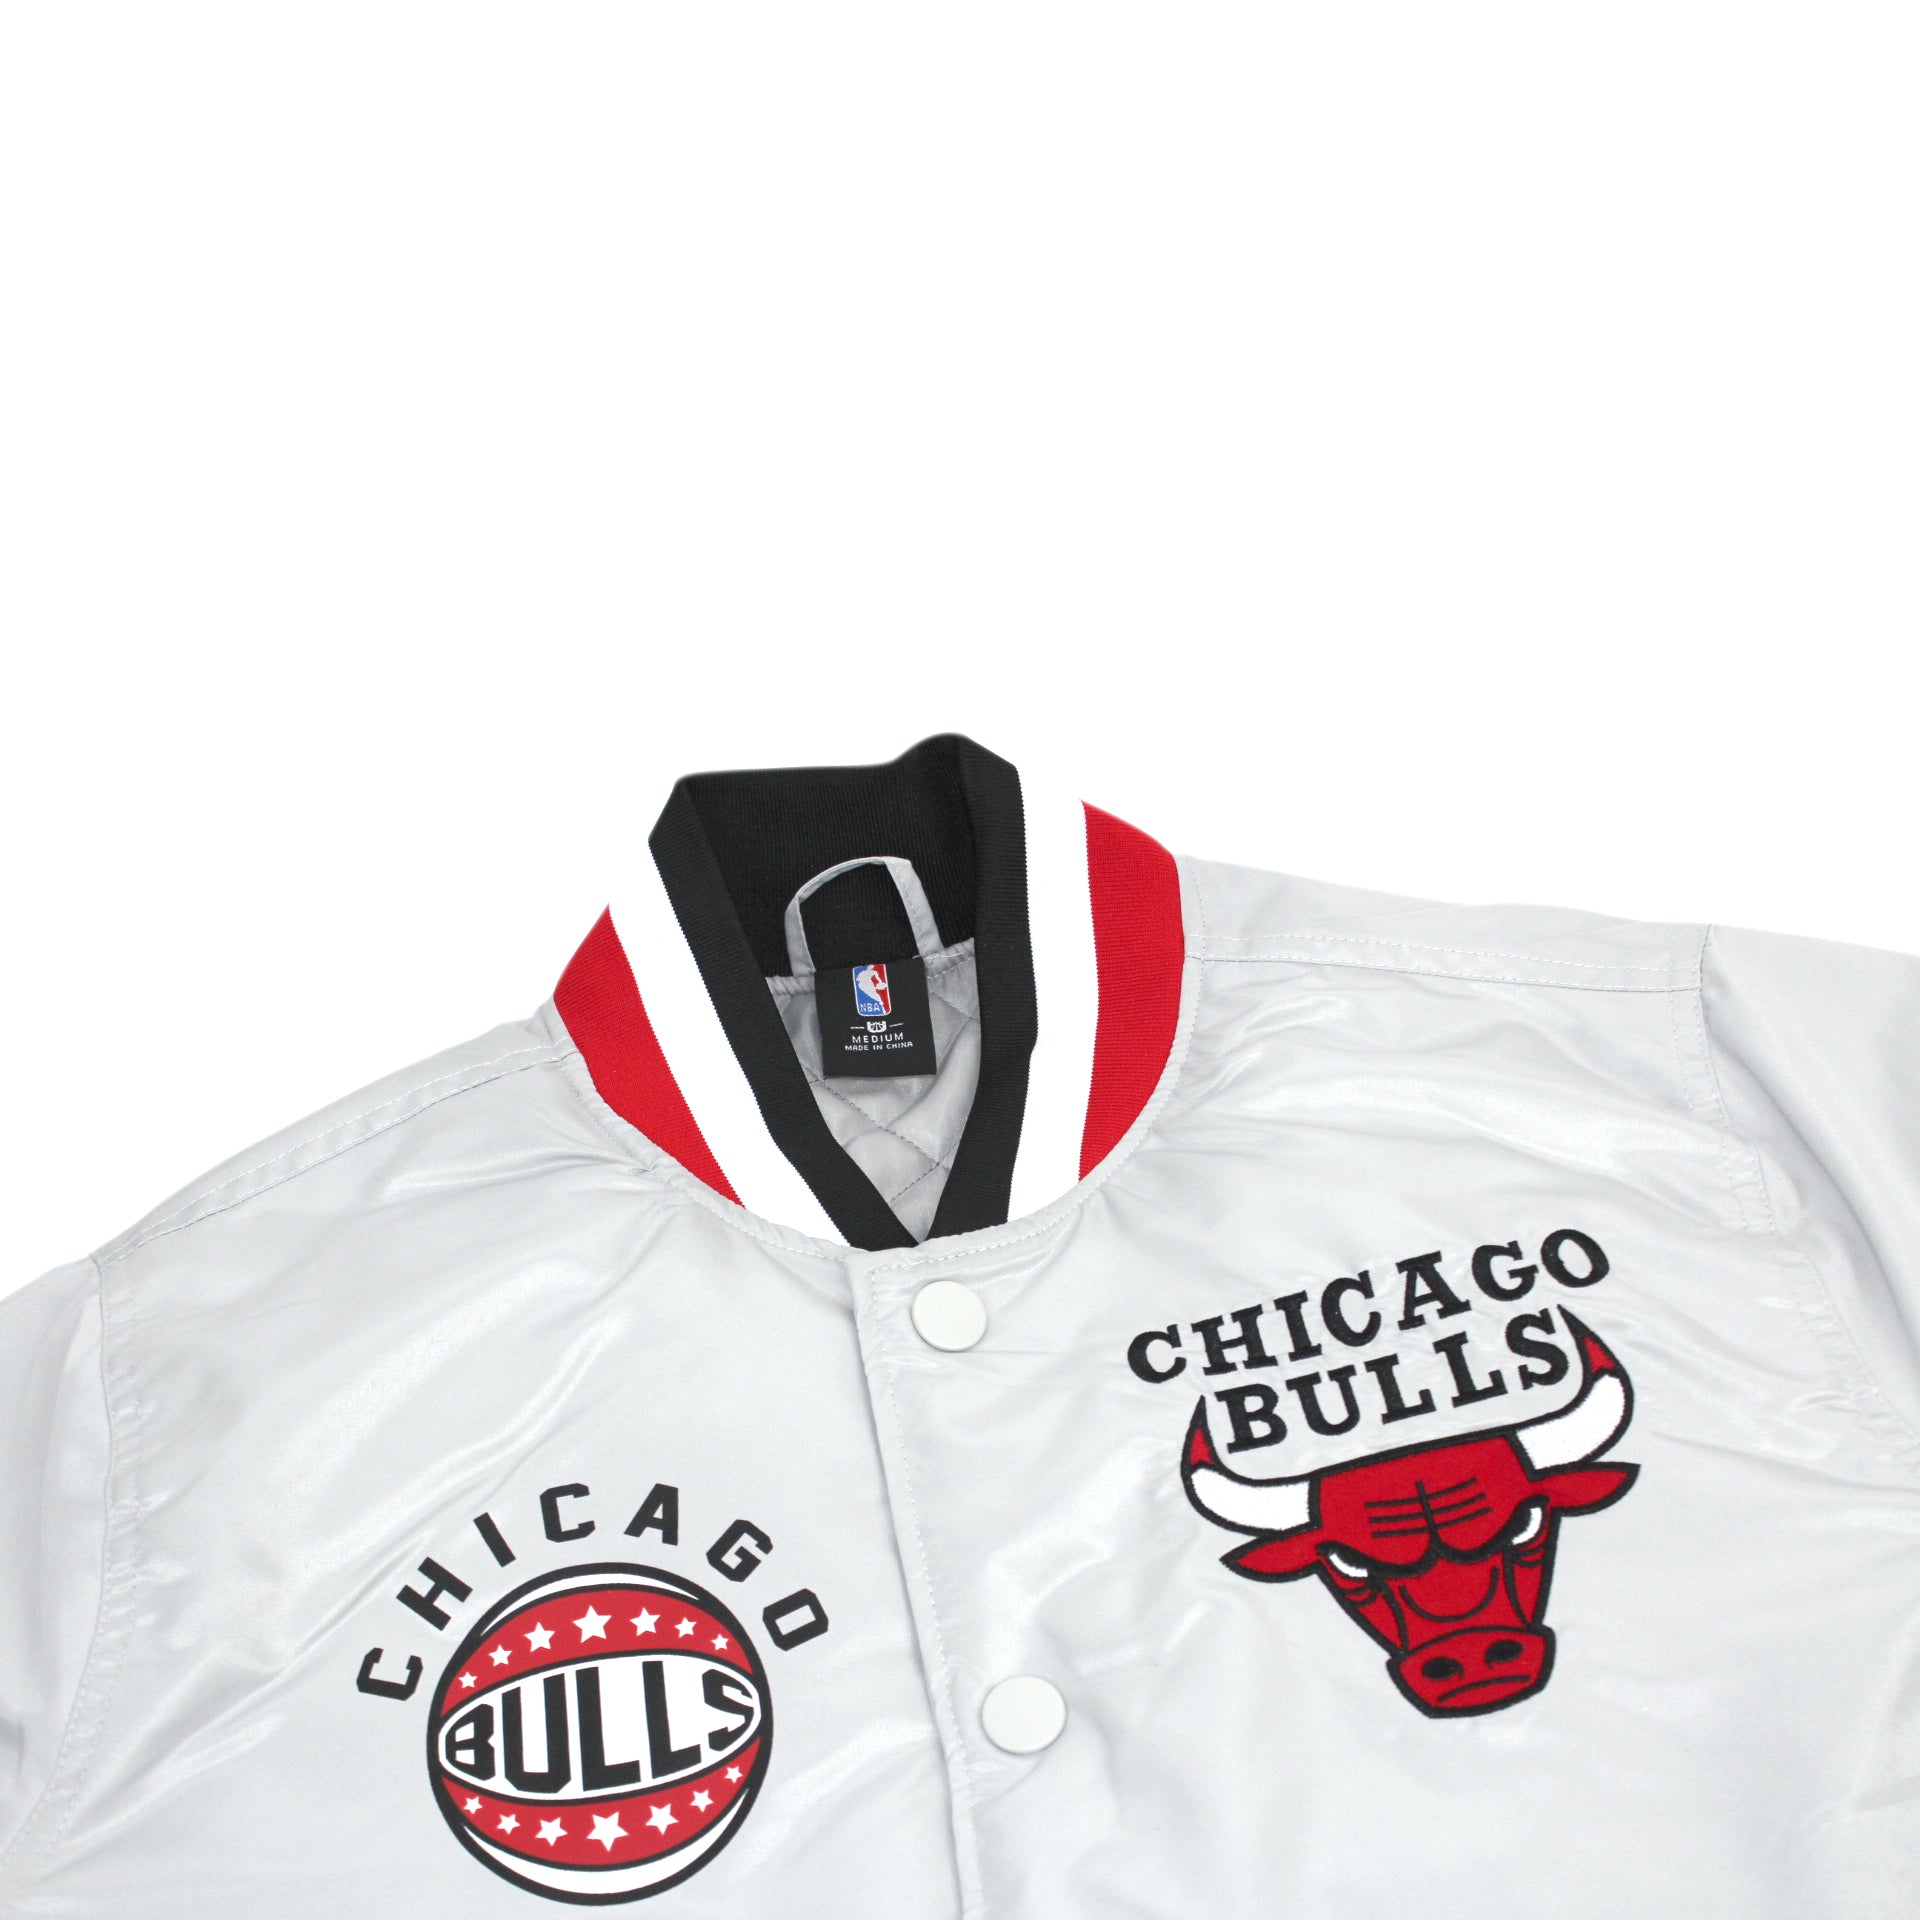 NBA Team Logo Chicago Bulls Varsity Jacket - Red - XS